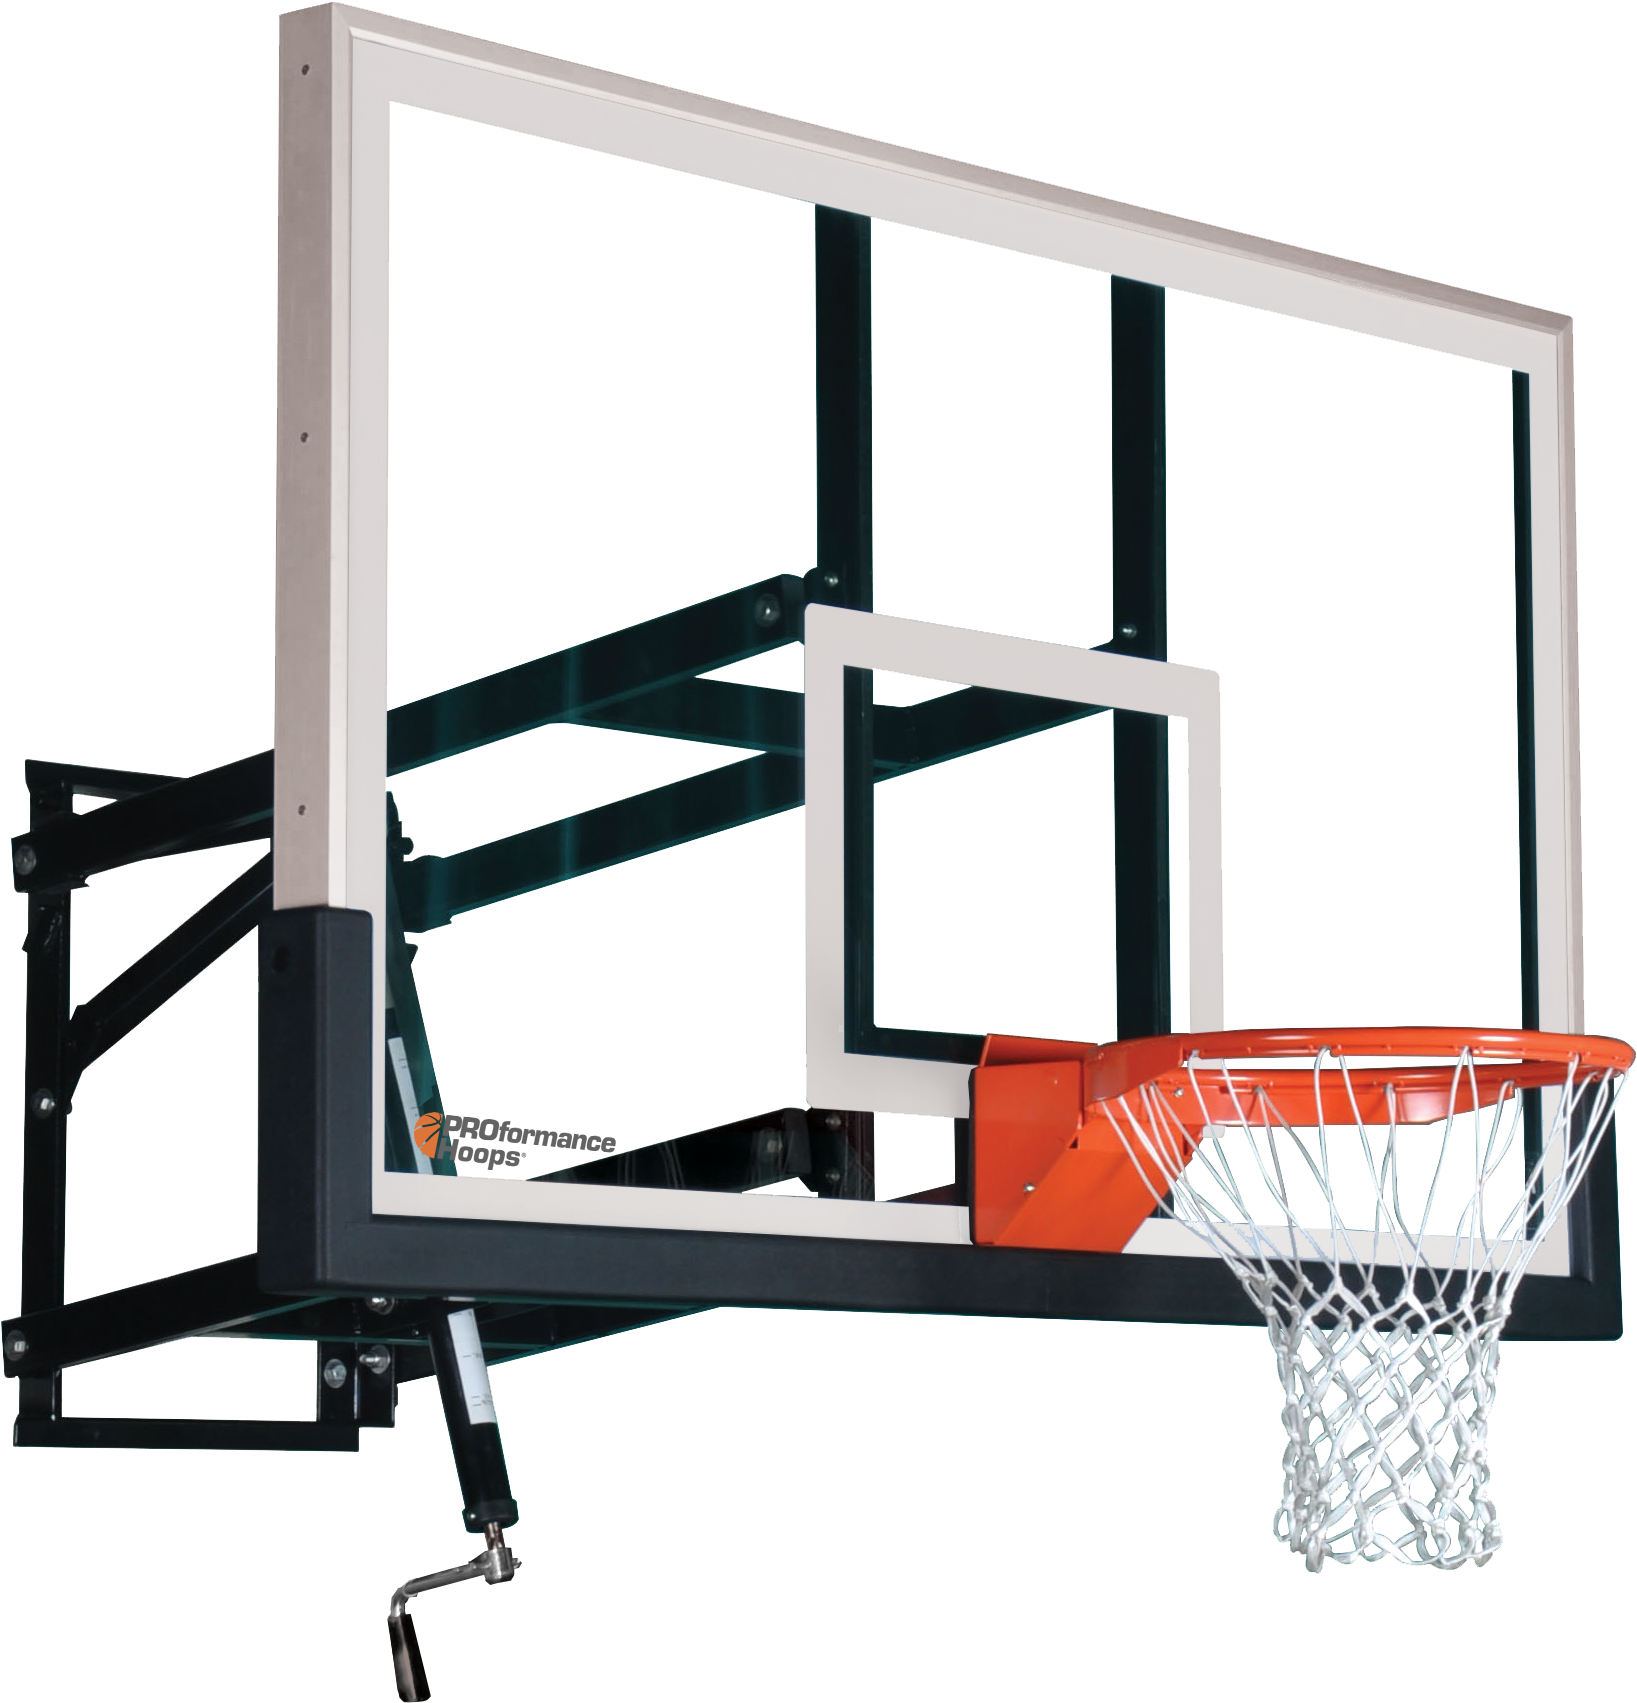 Download Wall Mount Wm72 Adjustable Basketball Hoop With 72 Basketball Hoop Png Png Image With No Background Pngkey Com